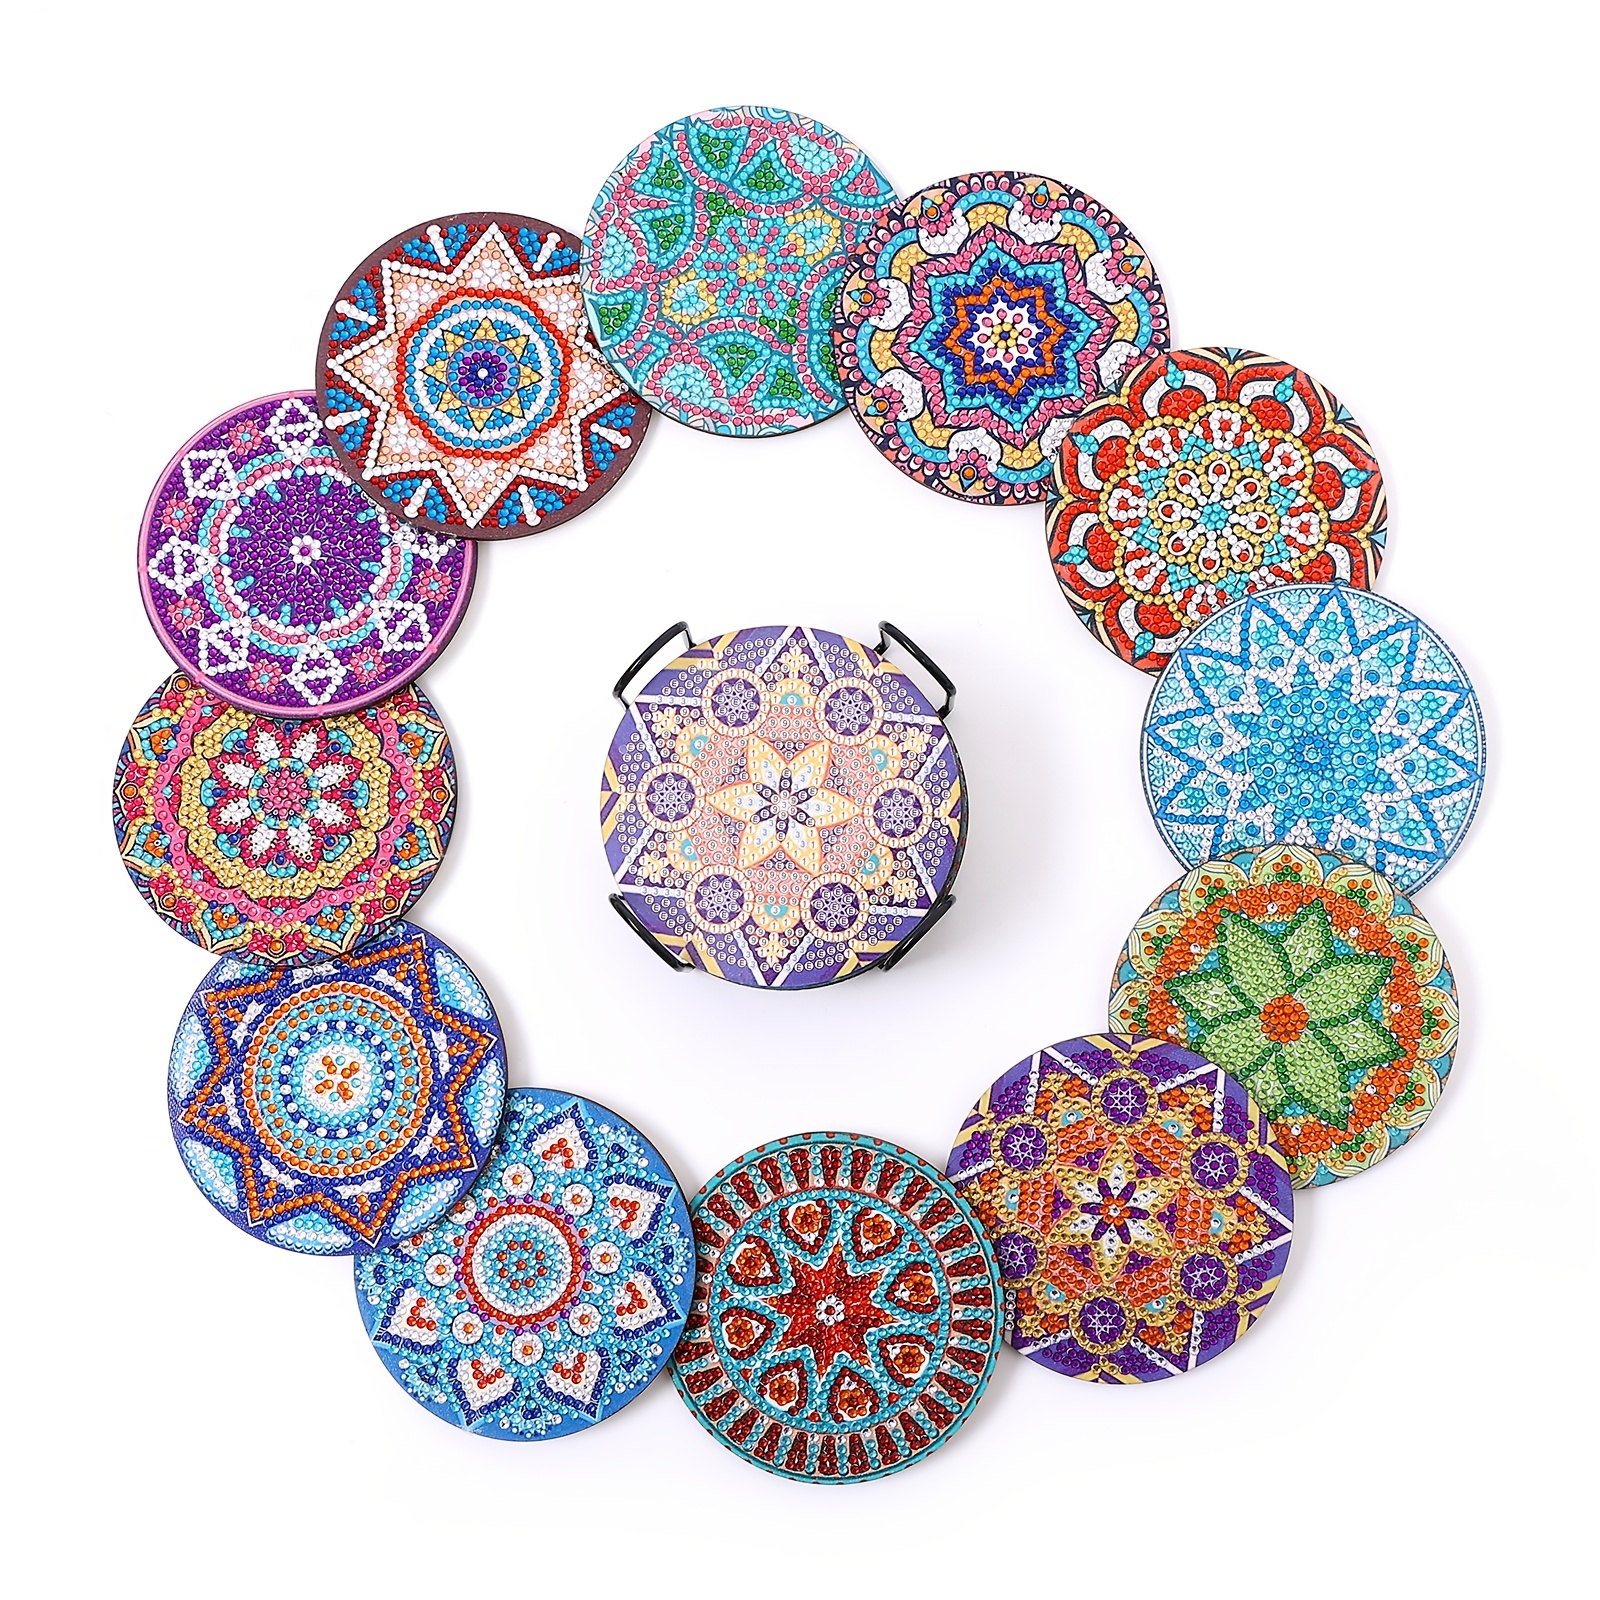 BSRESIN 8 Pcs Coasters with Holder Mandala DIY Diamond Art Crafts